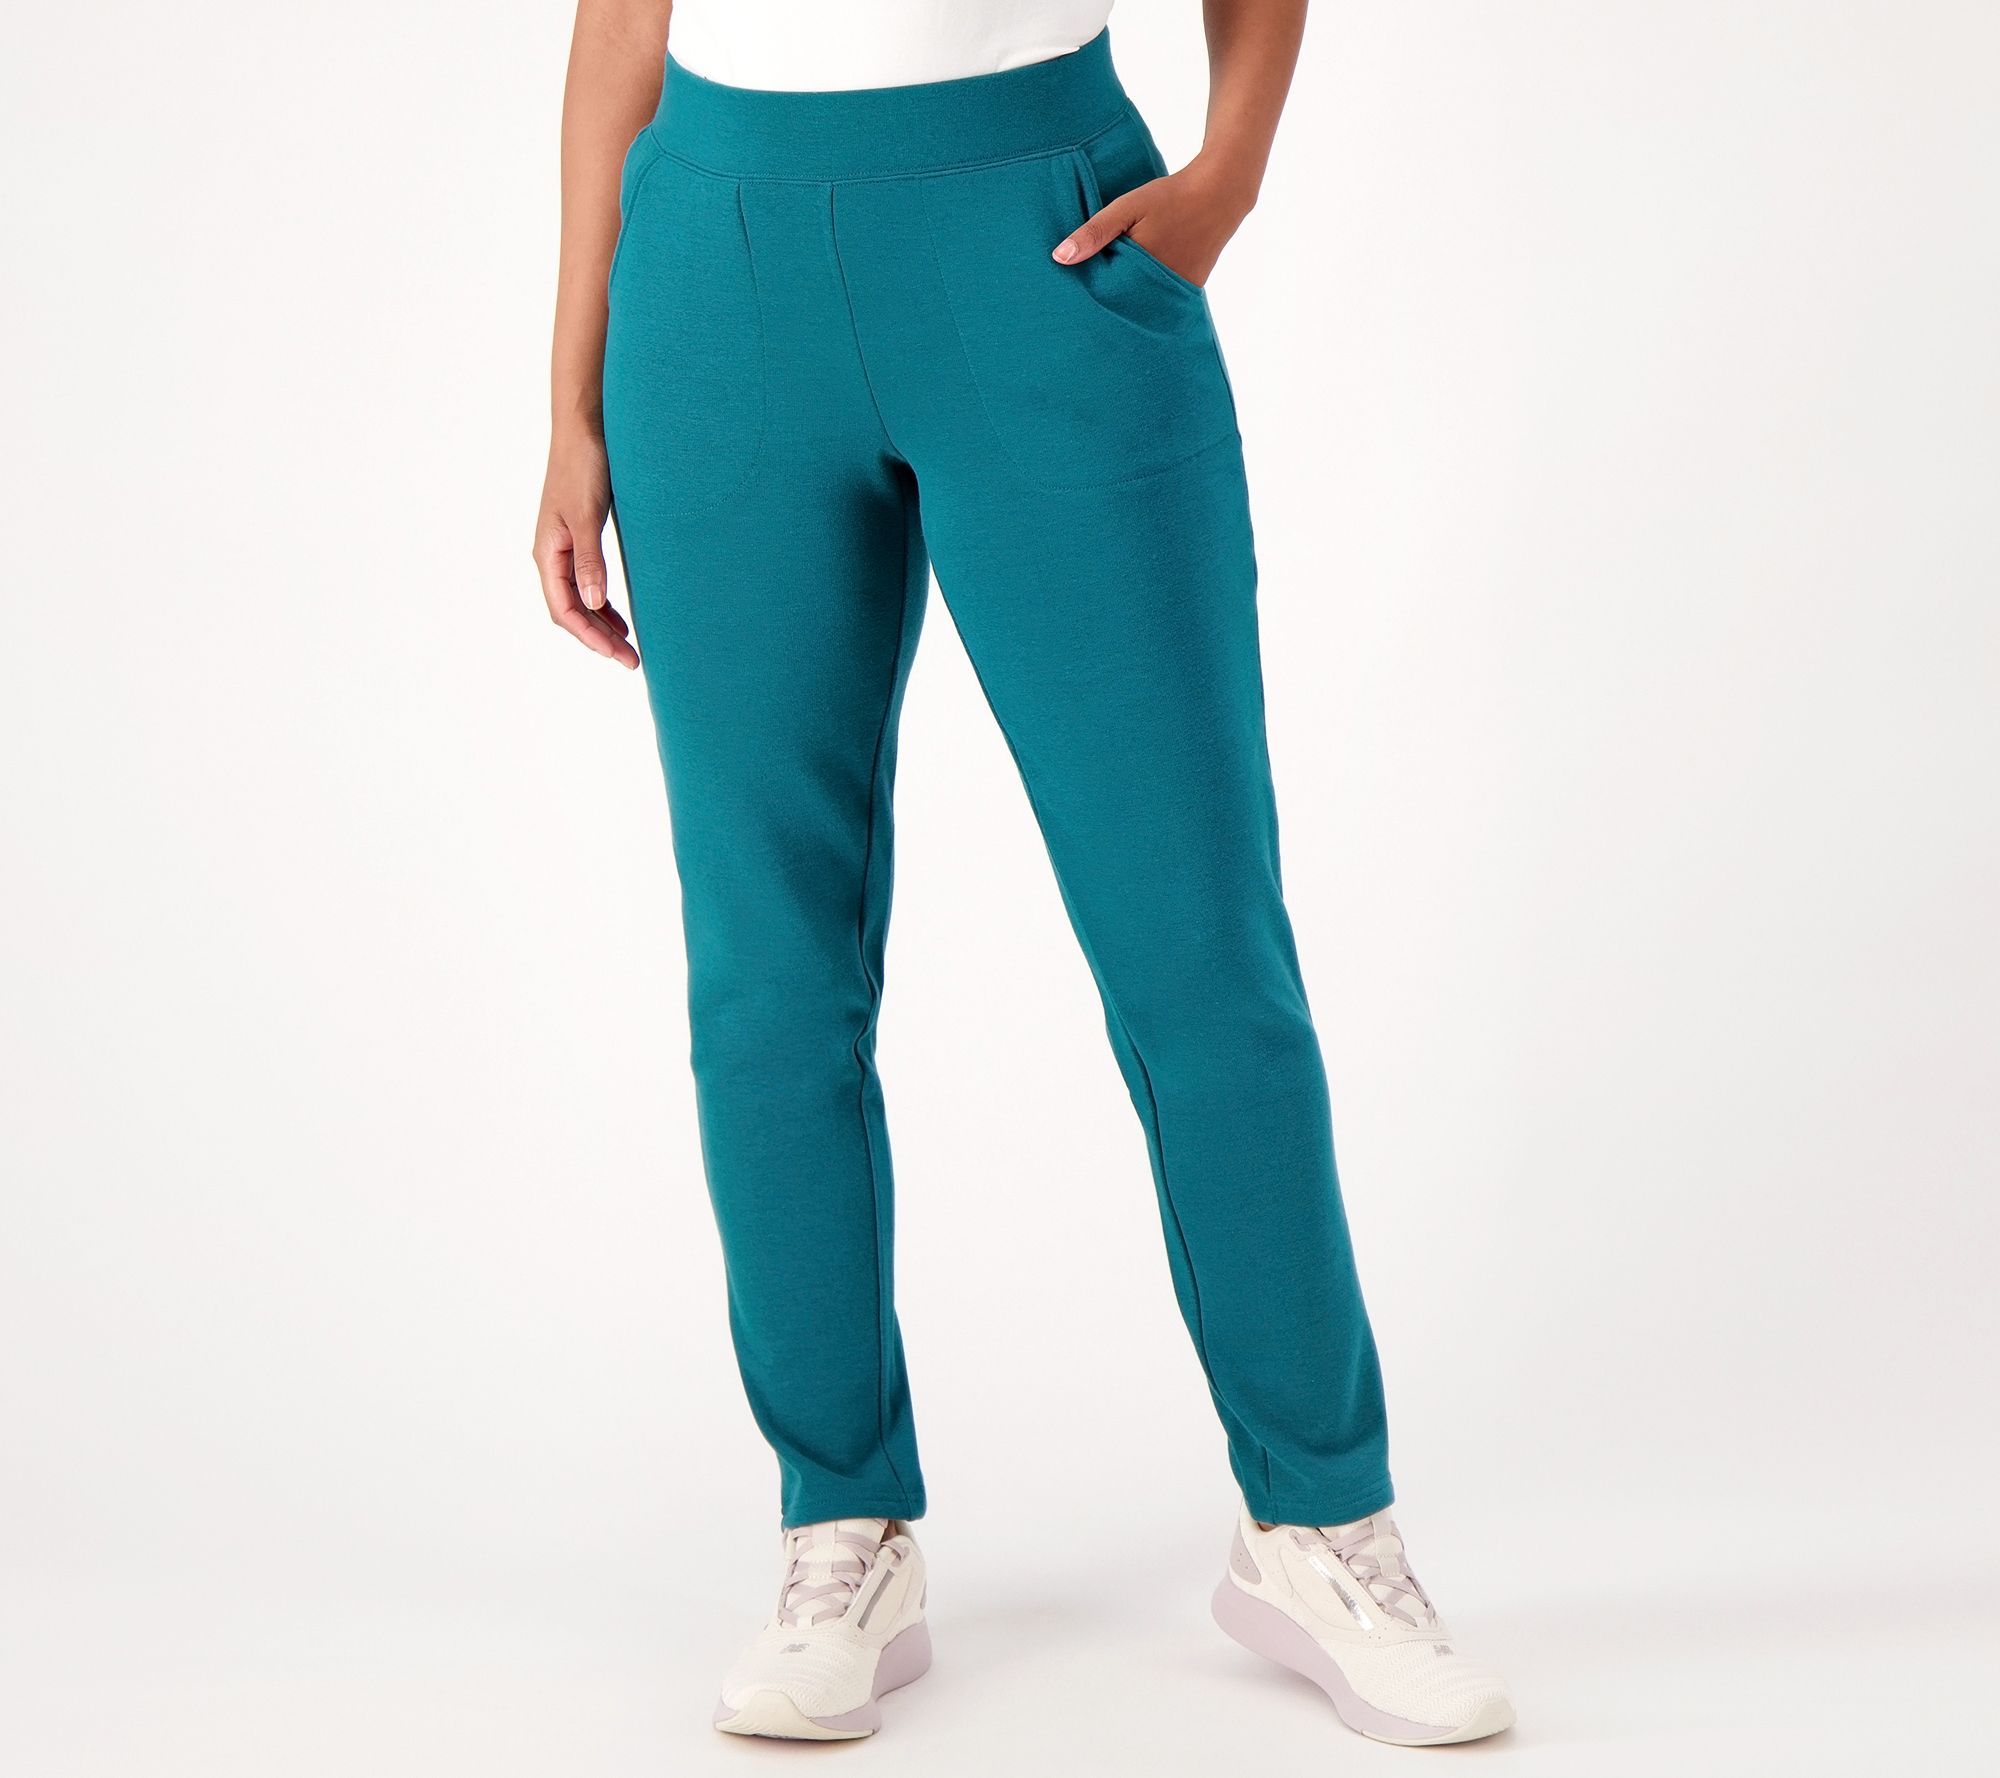 Denim & Co. Active Lush Lined Jersey Slim Straight Pant - QVC.com